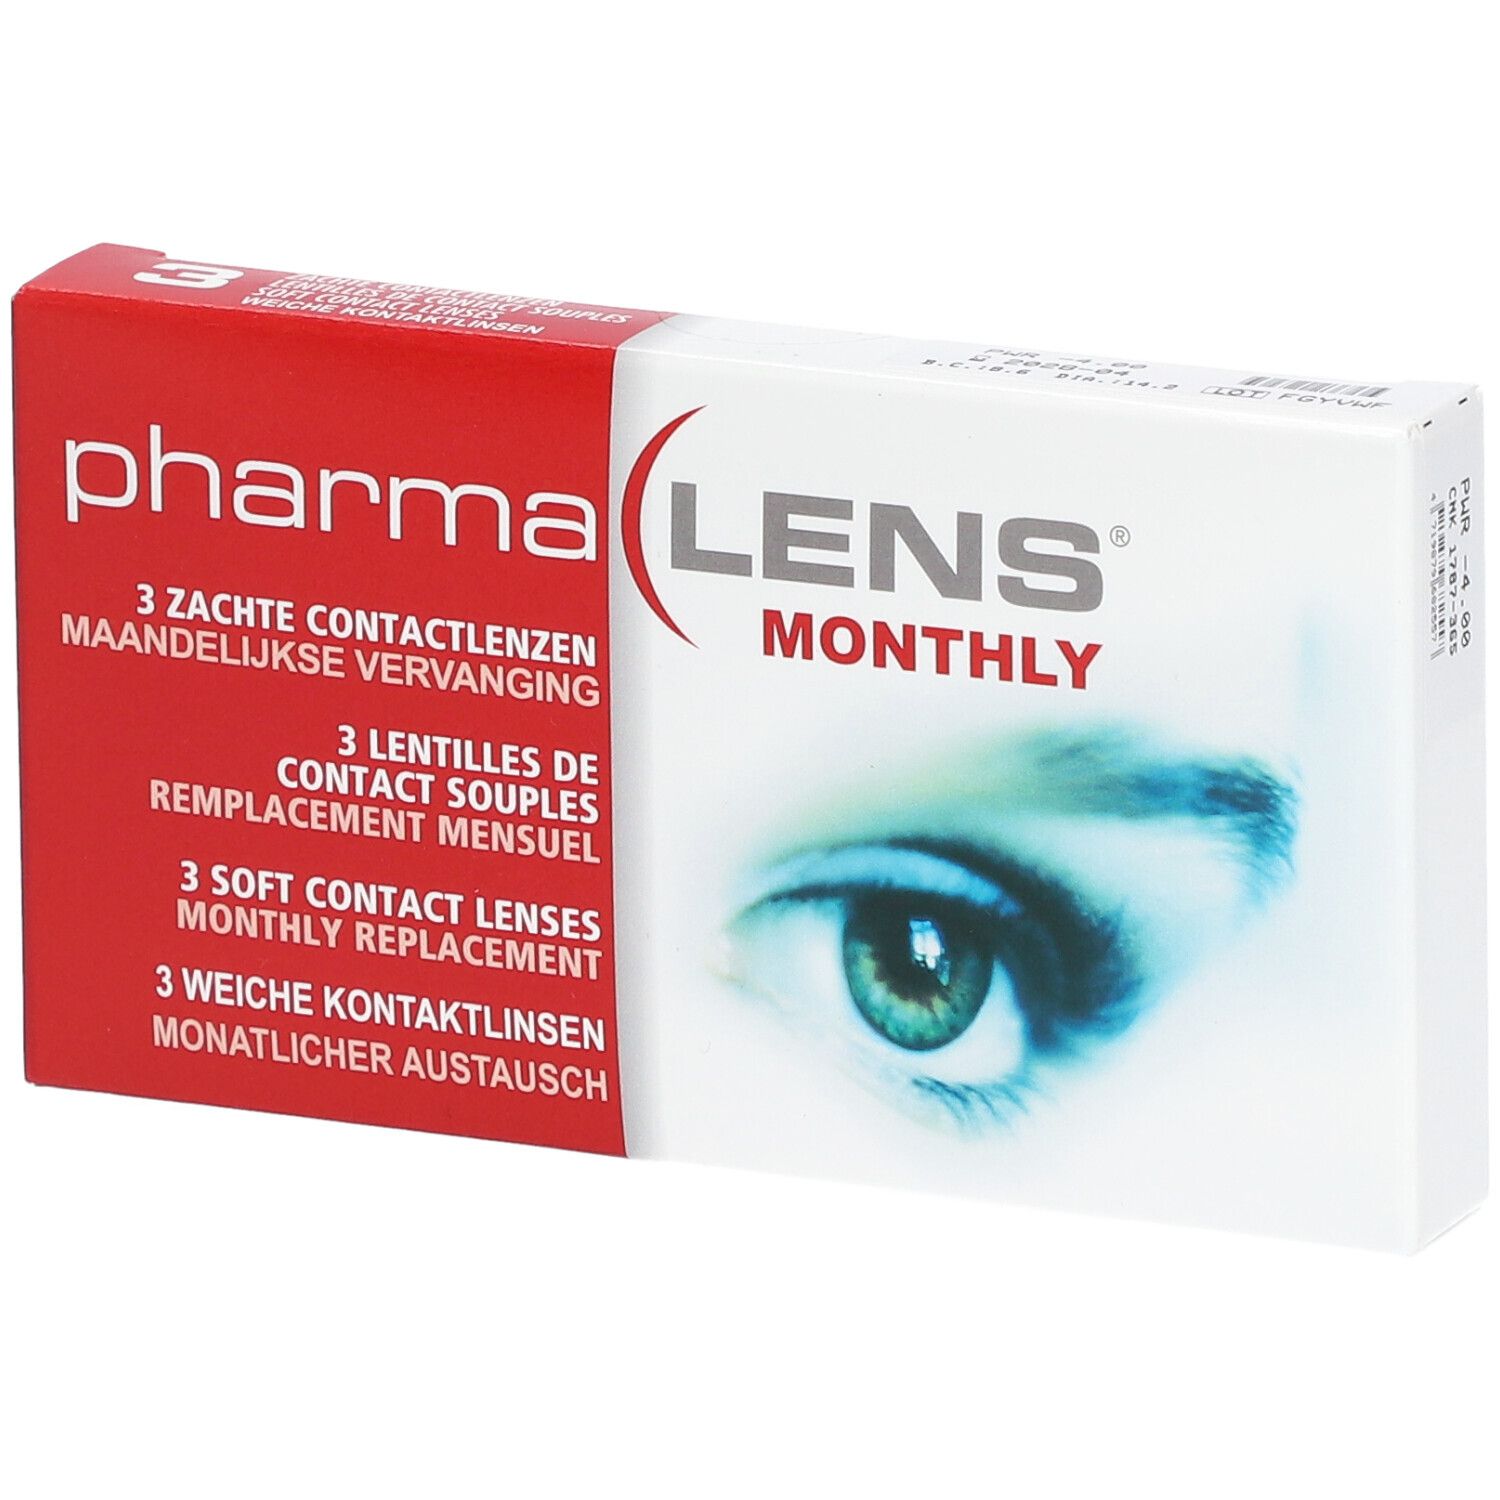 Lensfactory PharmaLENS Monthly Diottria -4.00